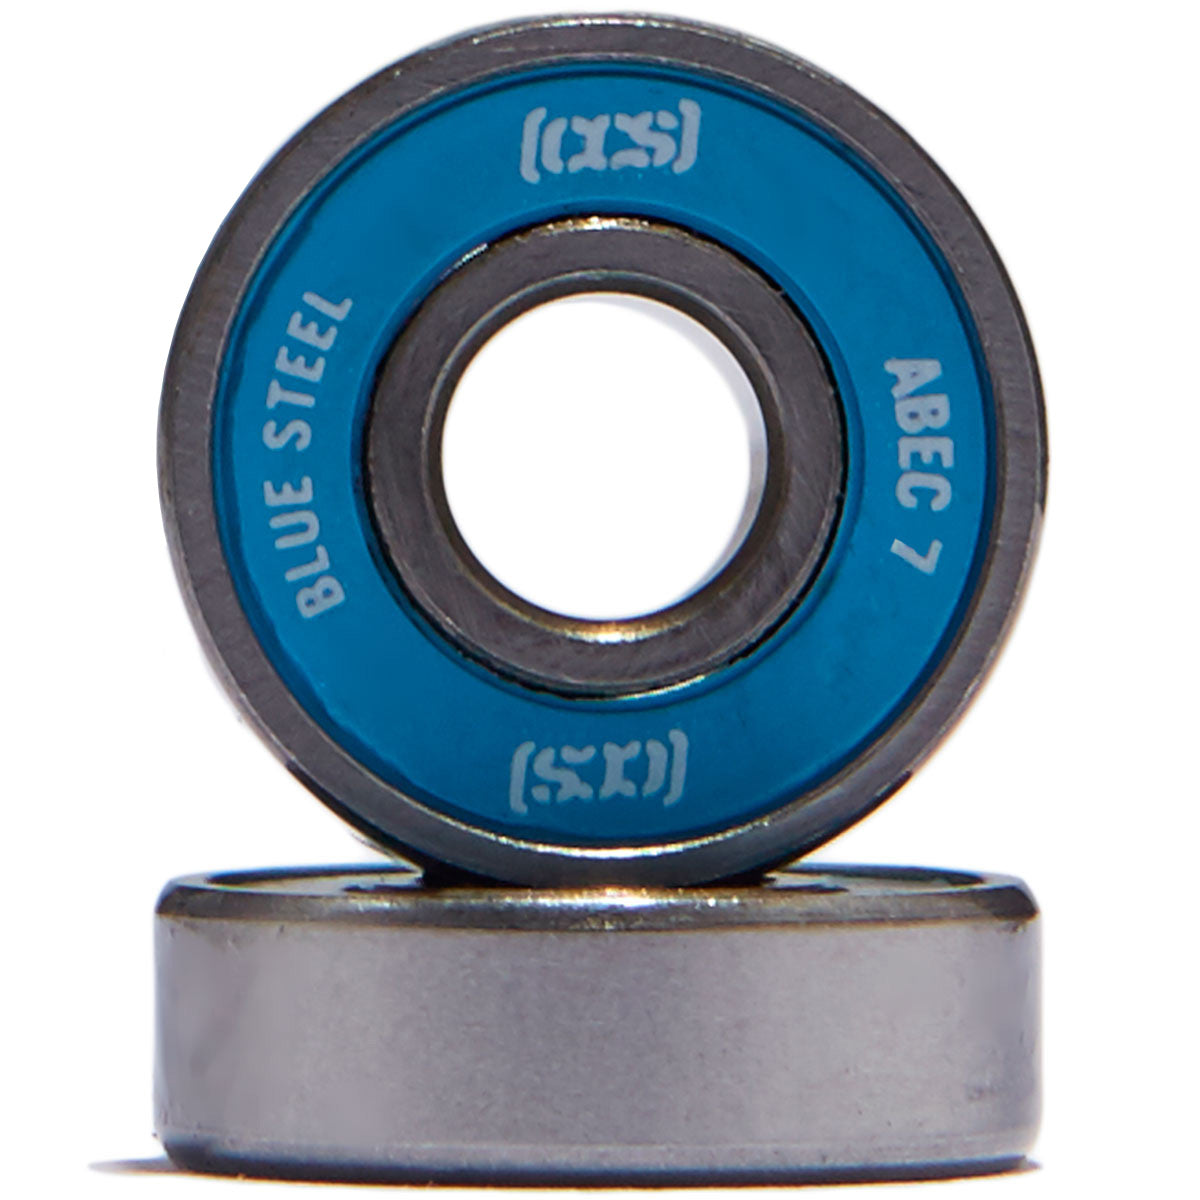 CCS Blue Steel Abec 7 Skateboard Bearings - Packaged image 1